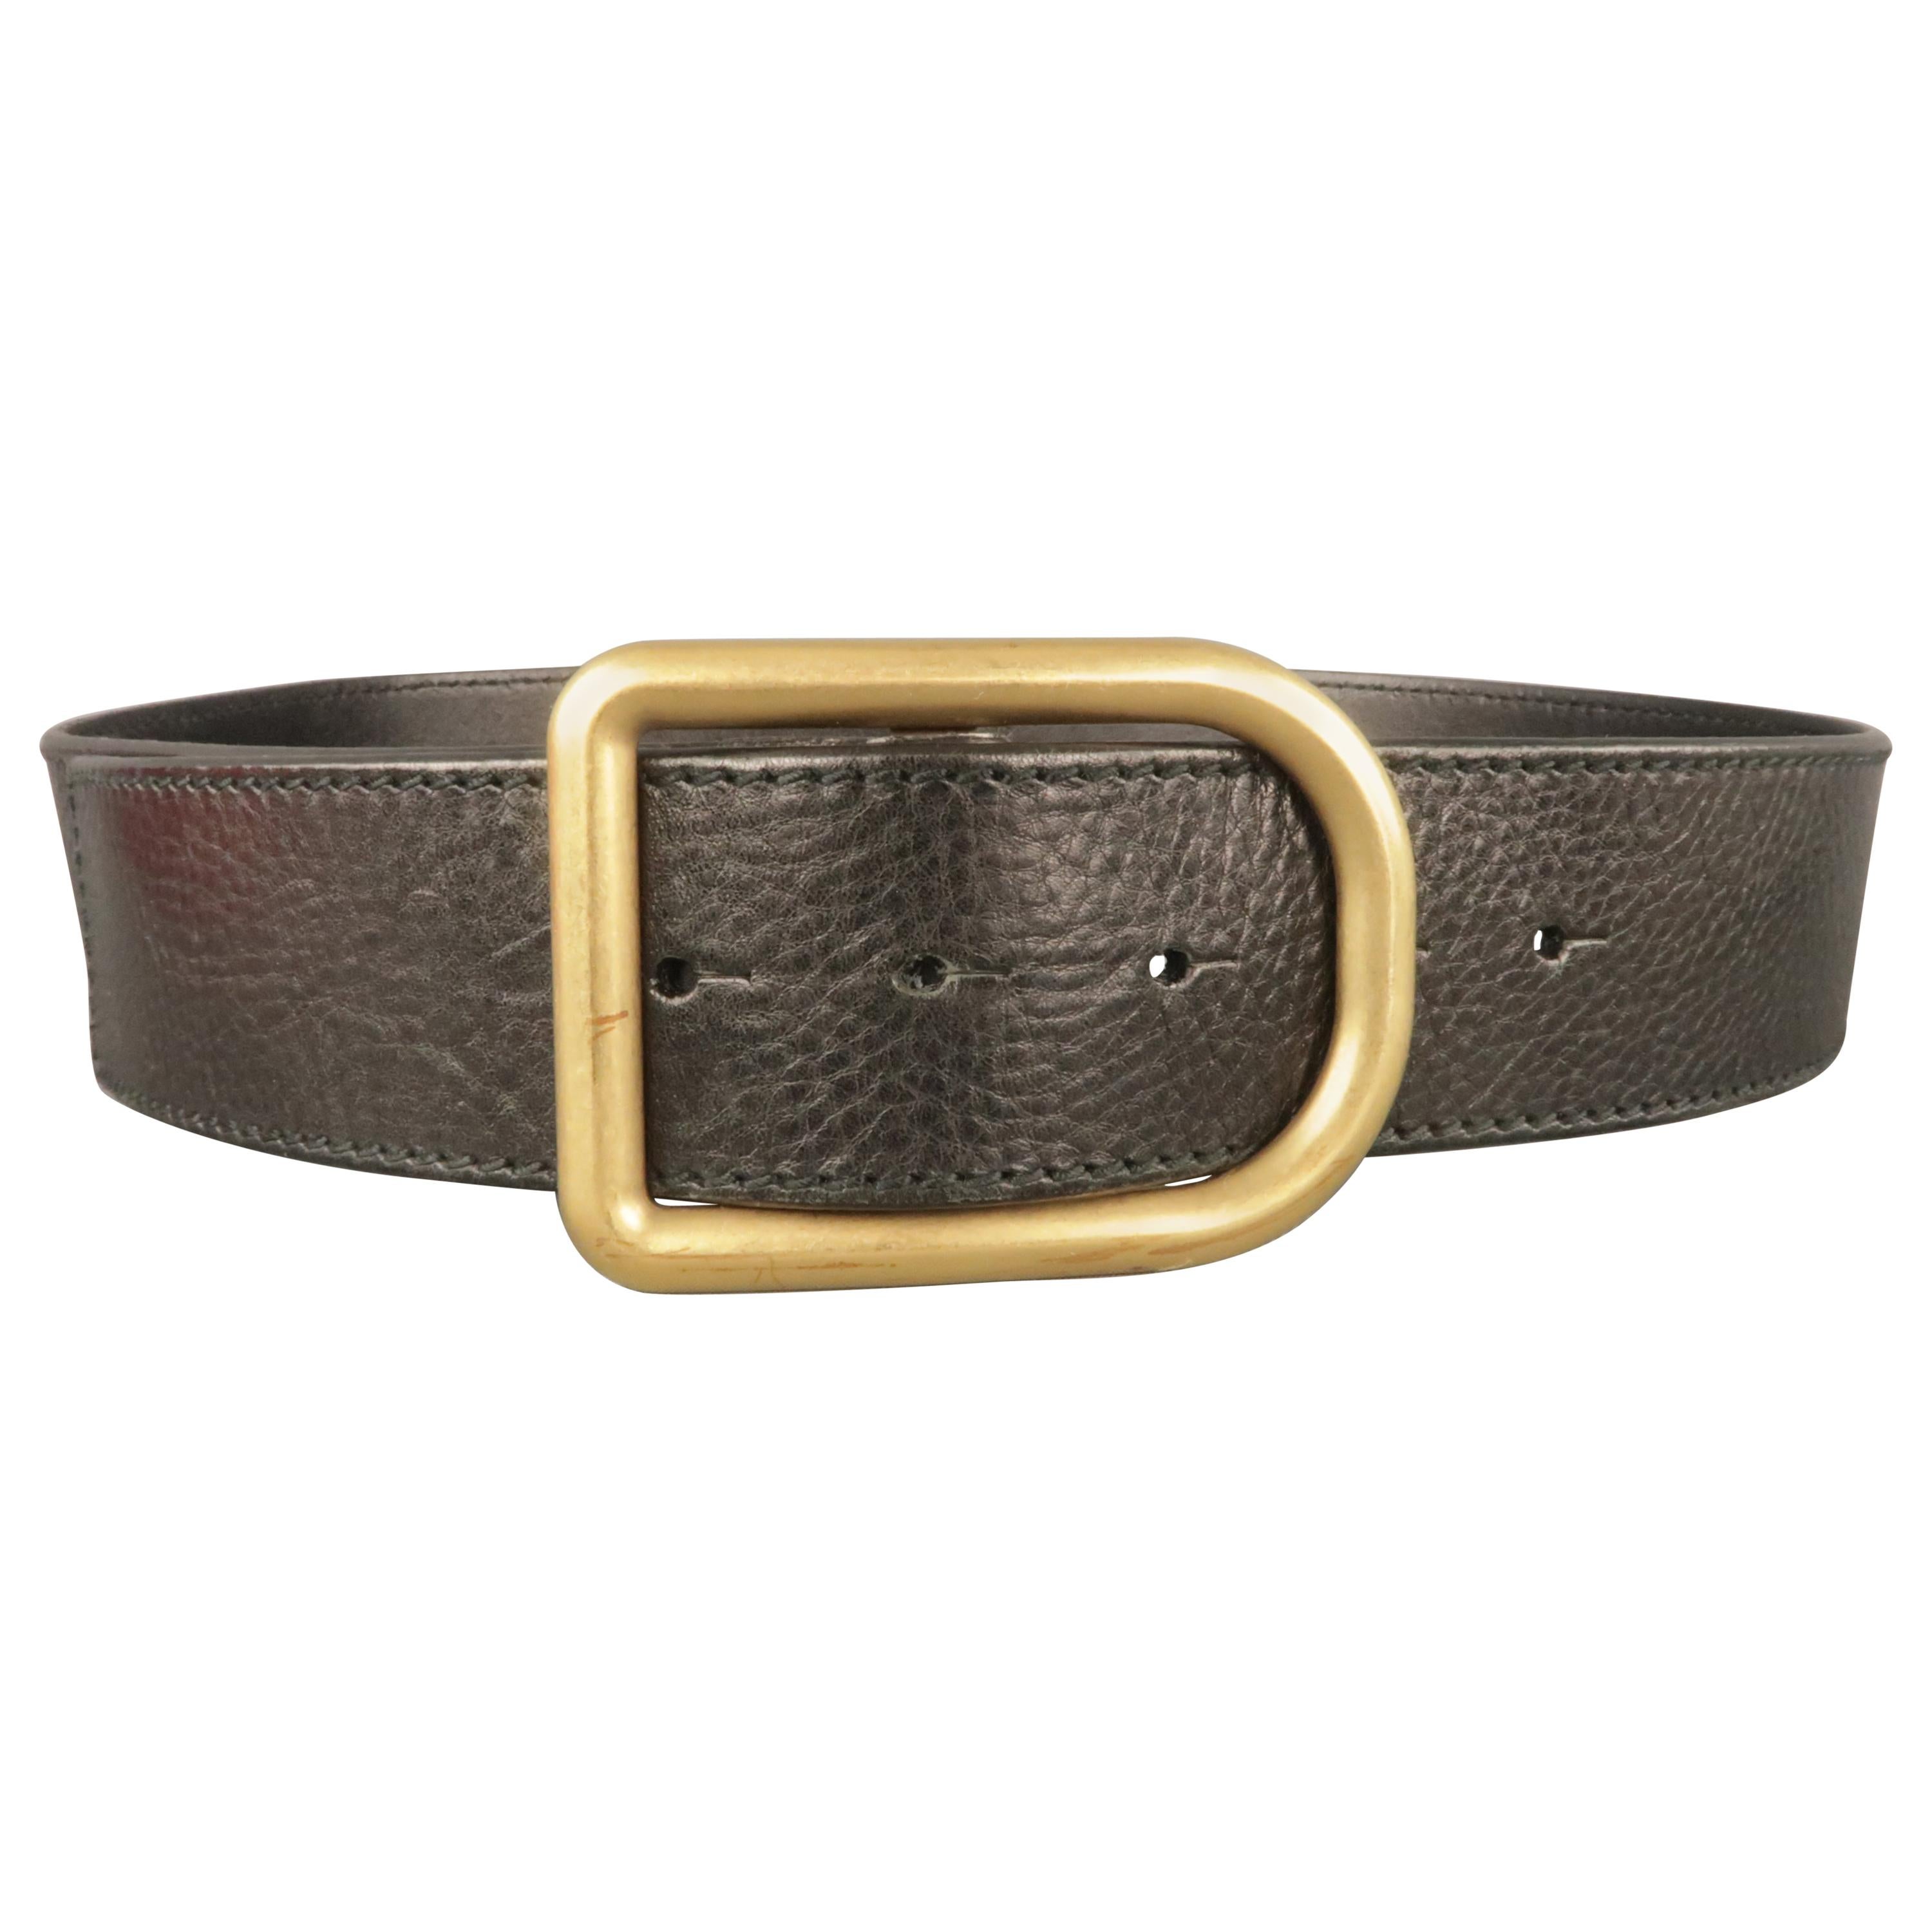  VALENTINO GARAVANI Size 34 Black Leather Belt